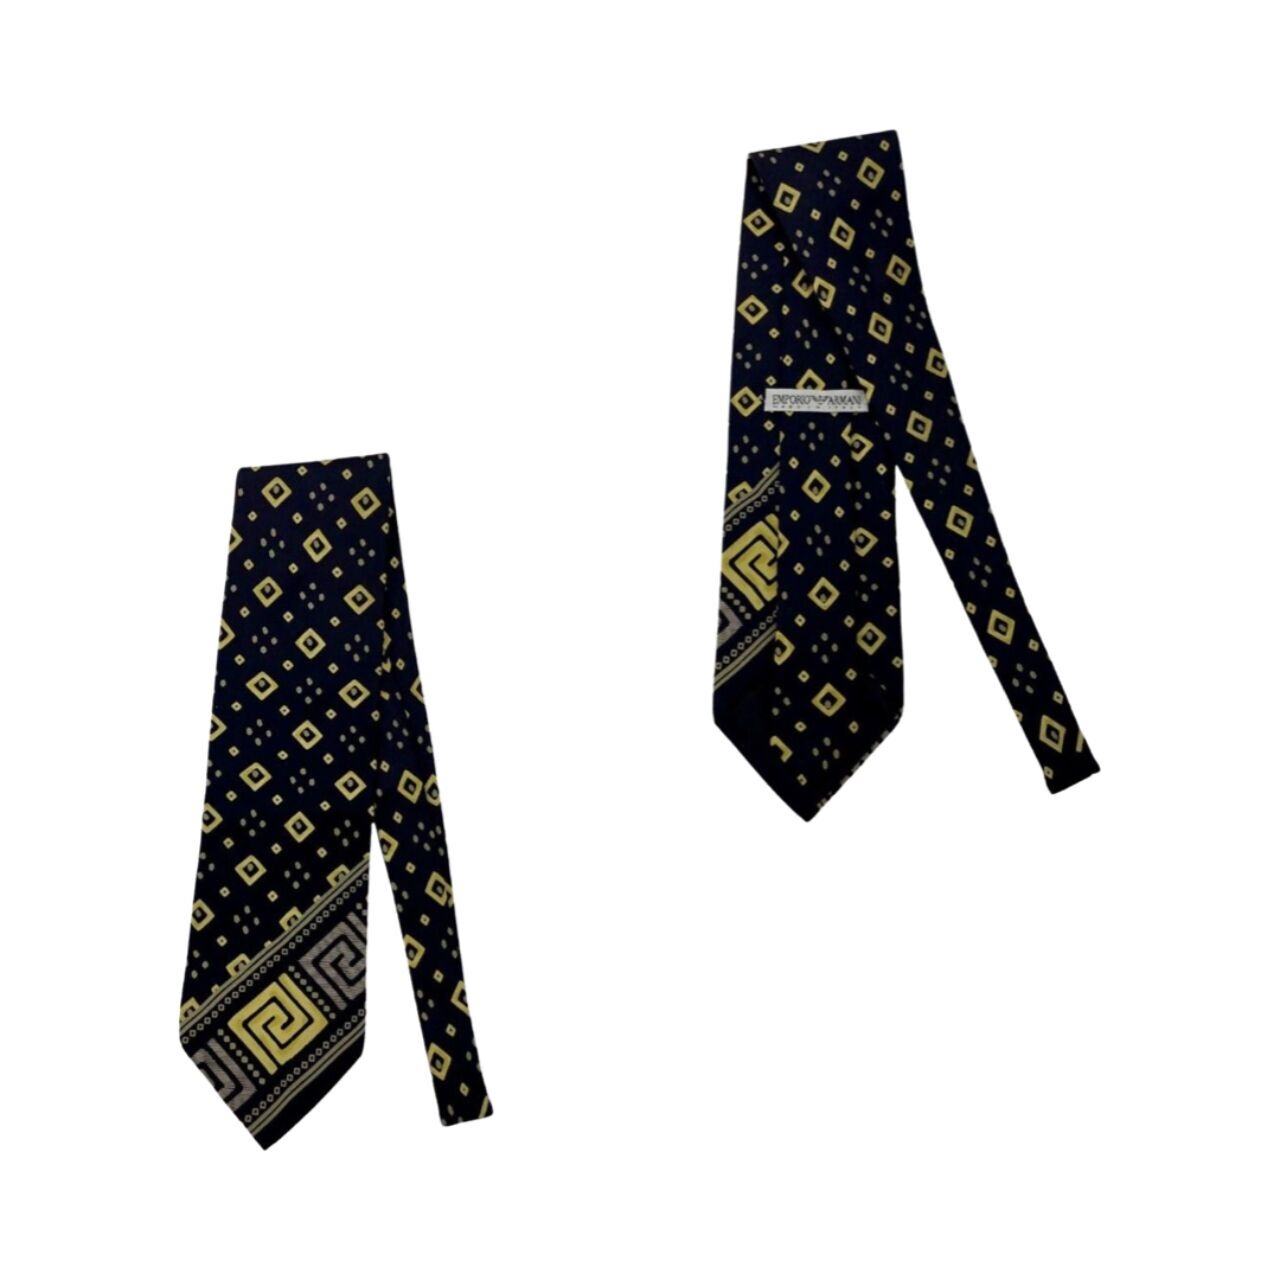 Emporio Armani Black & Yellow Silk Tie